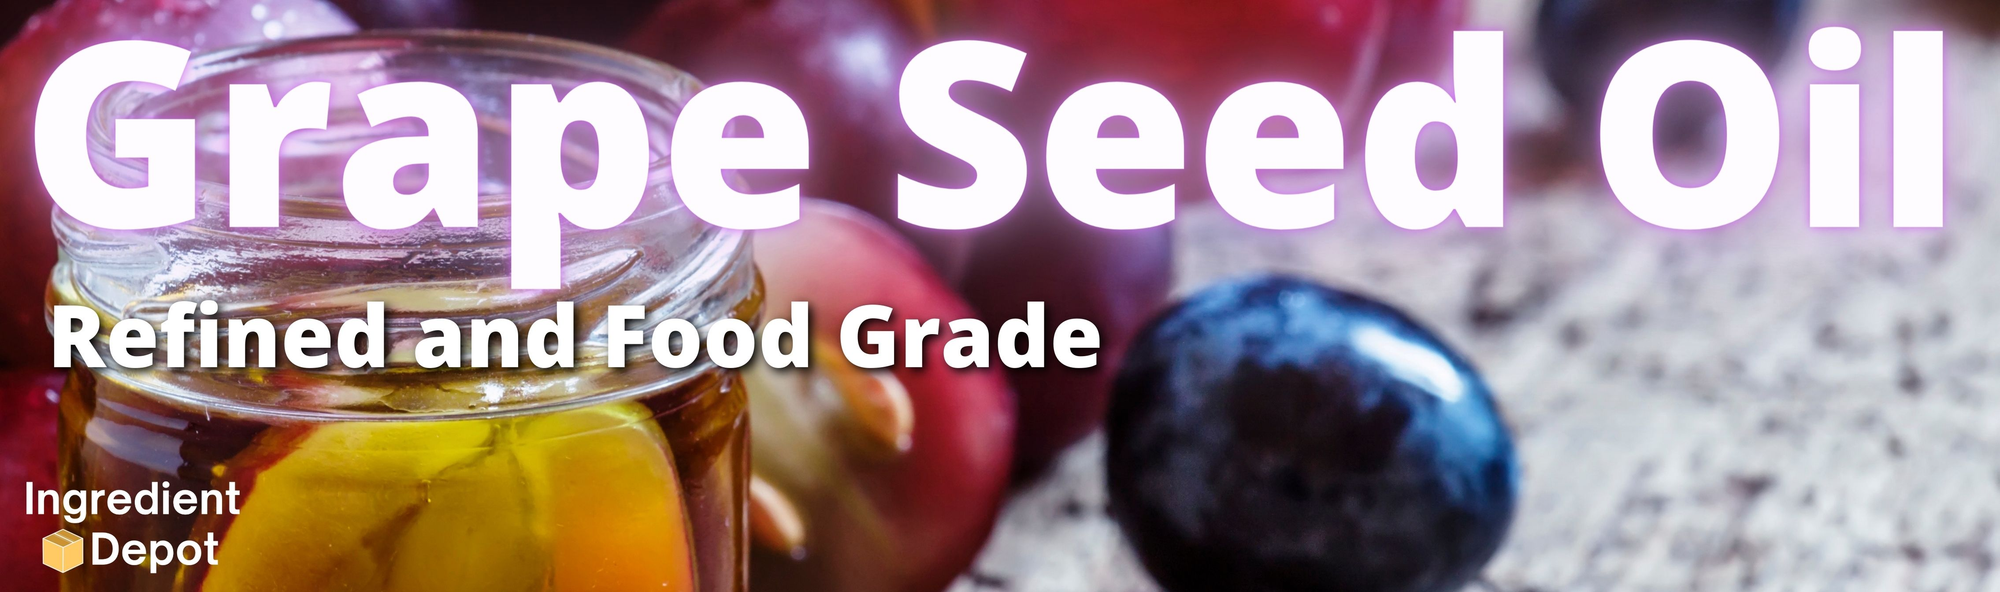 Ingredient Depot Grape Seed Oil Refined Food Grade